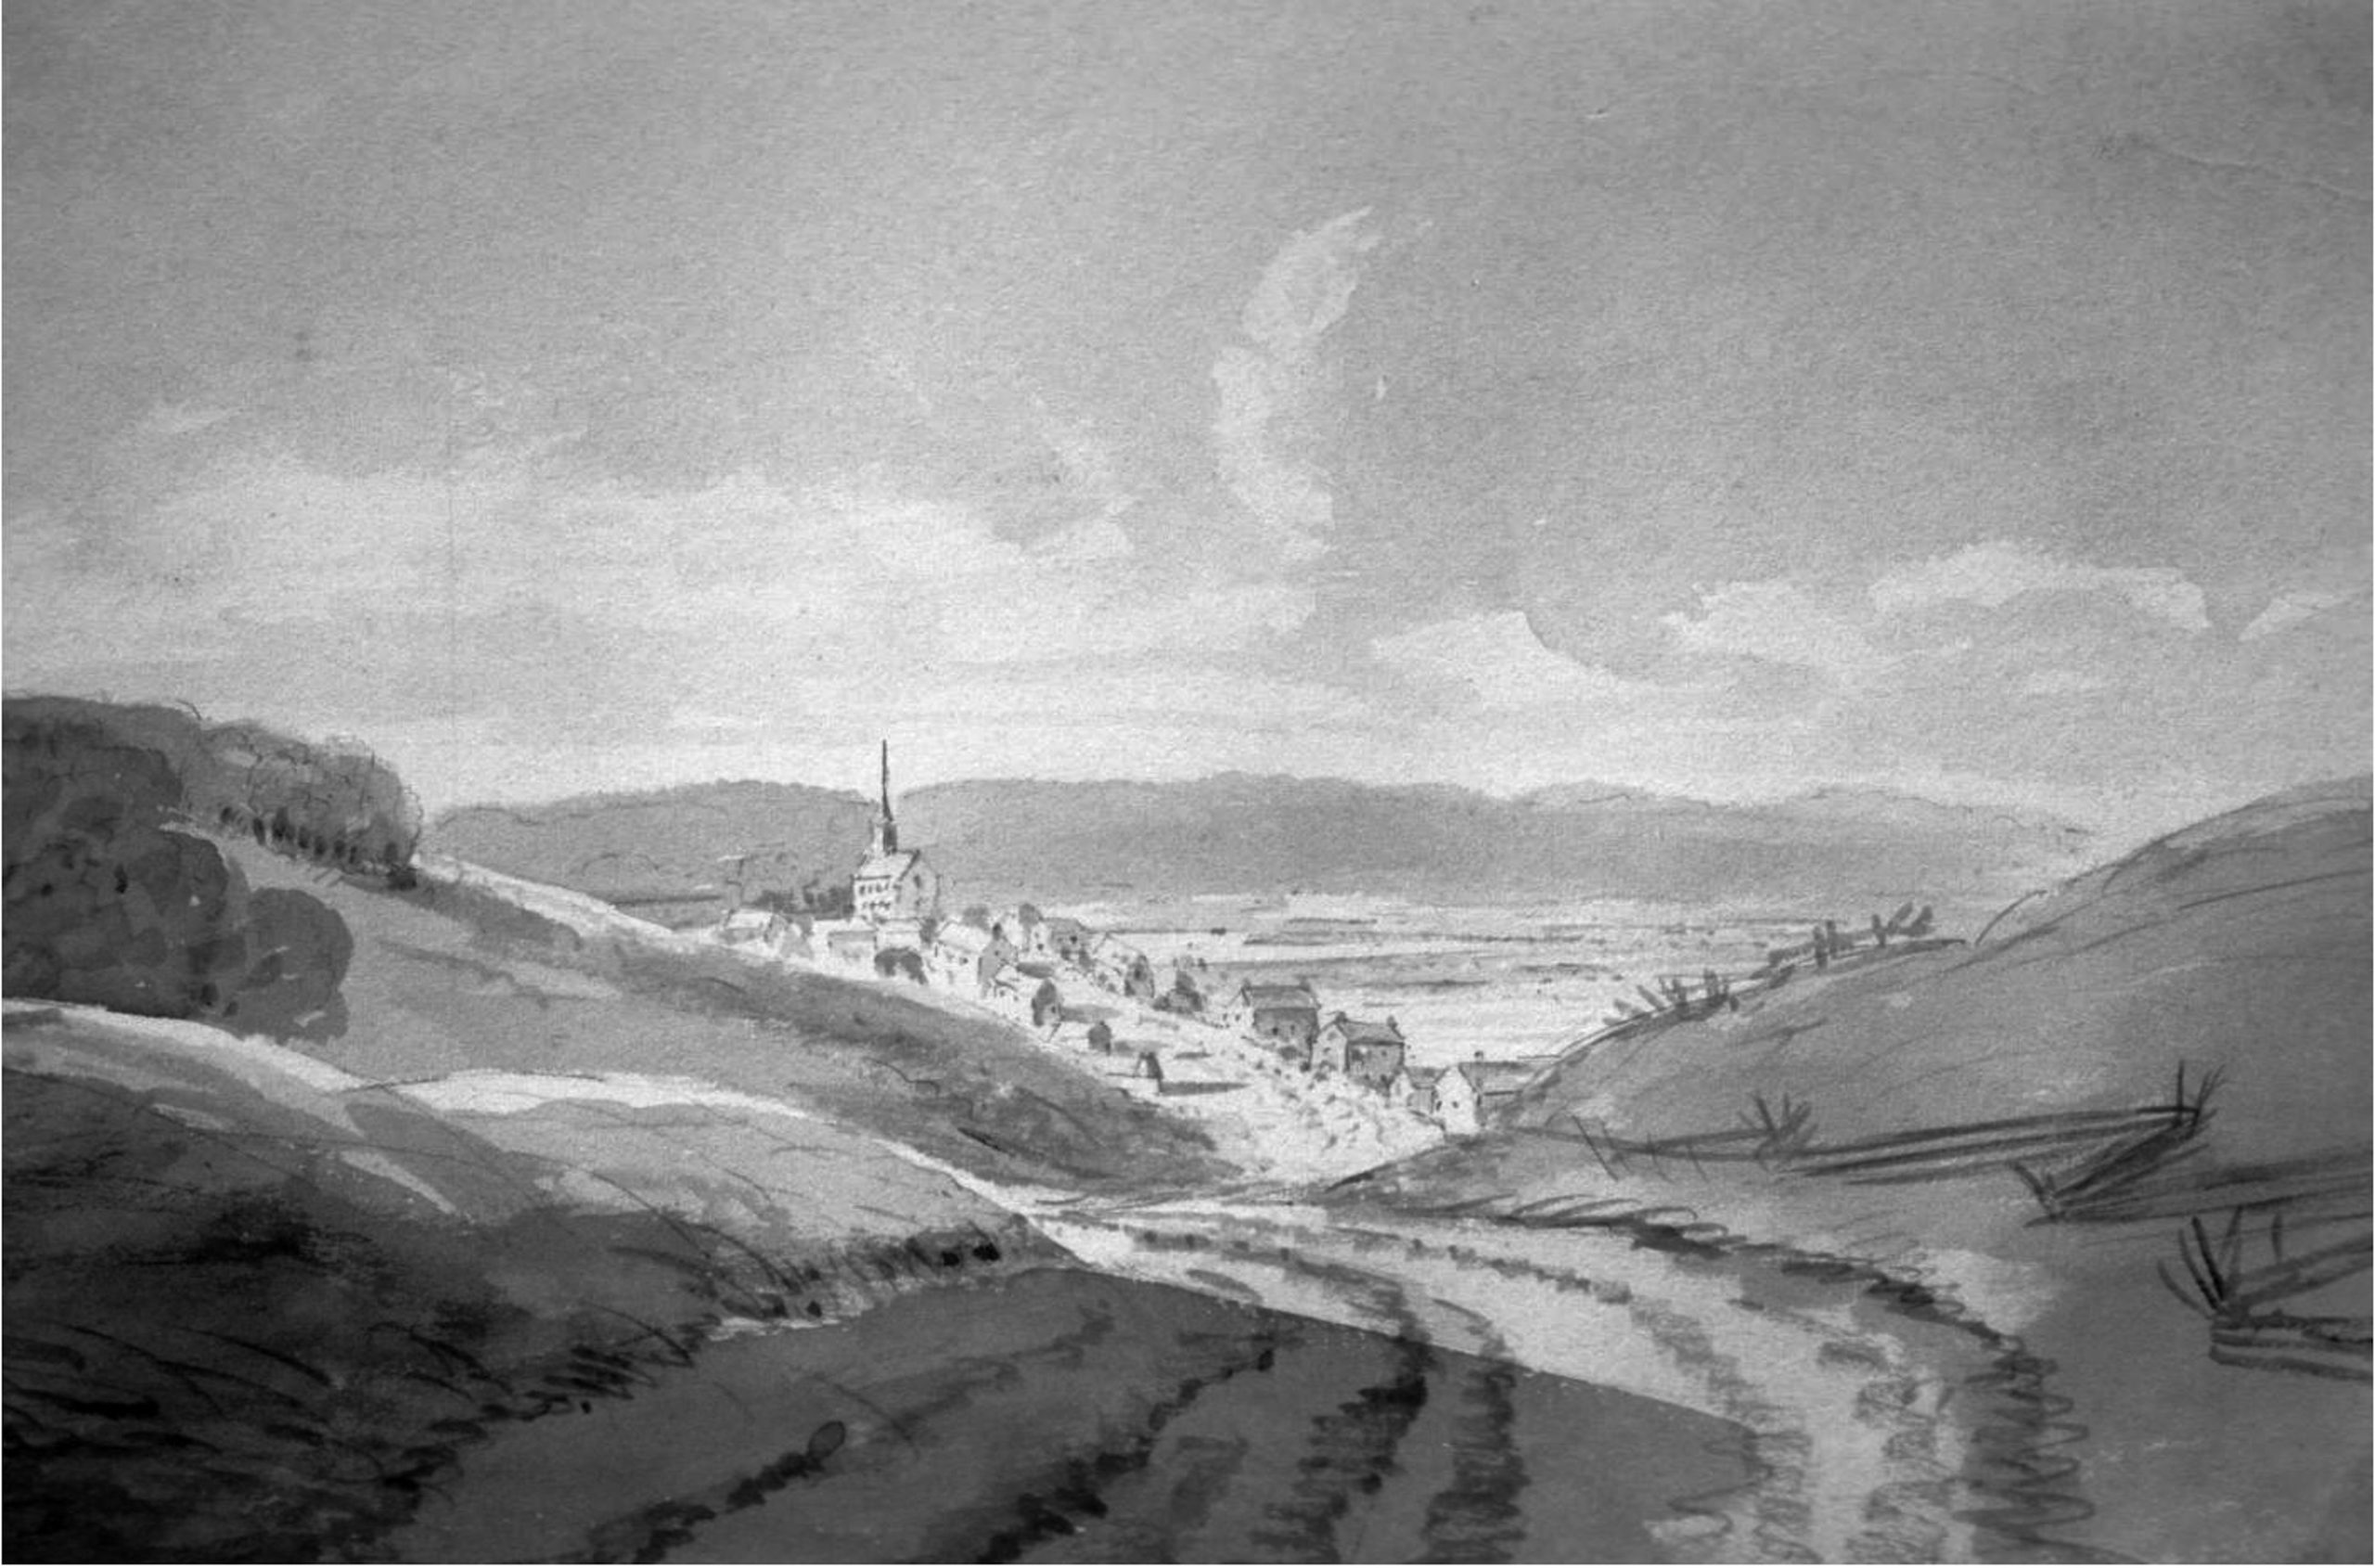 Horton Village in 1817